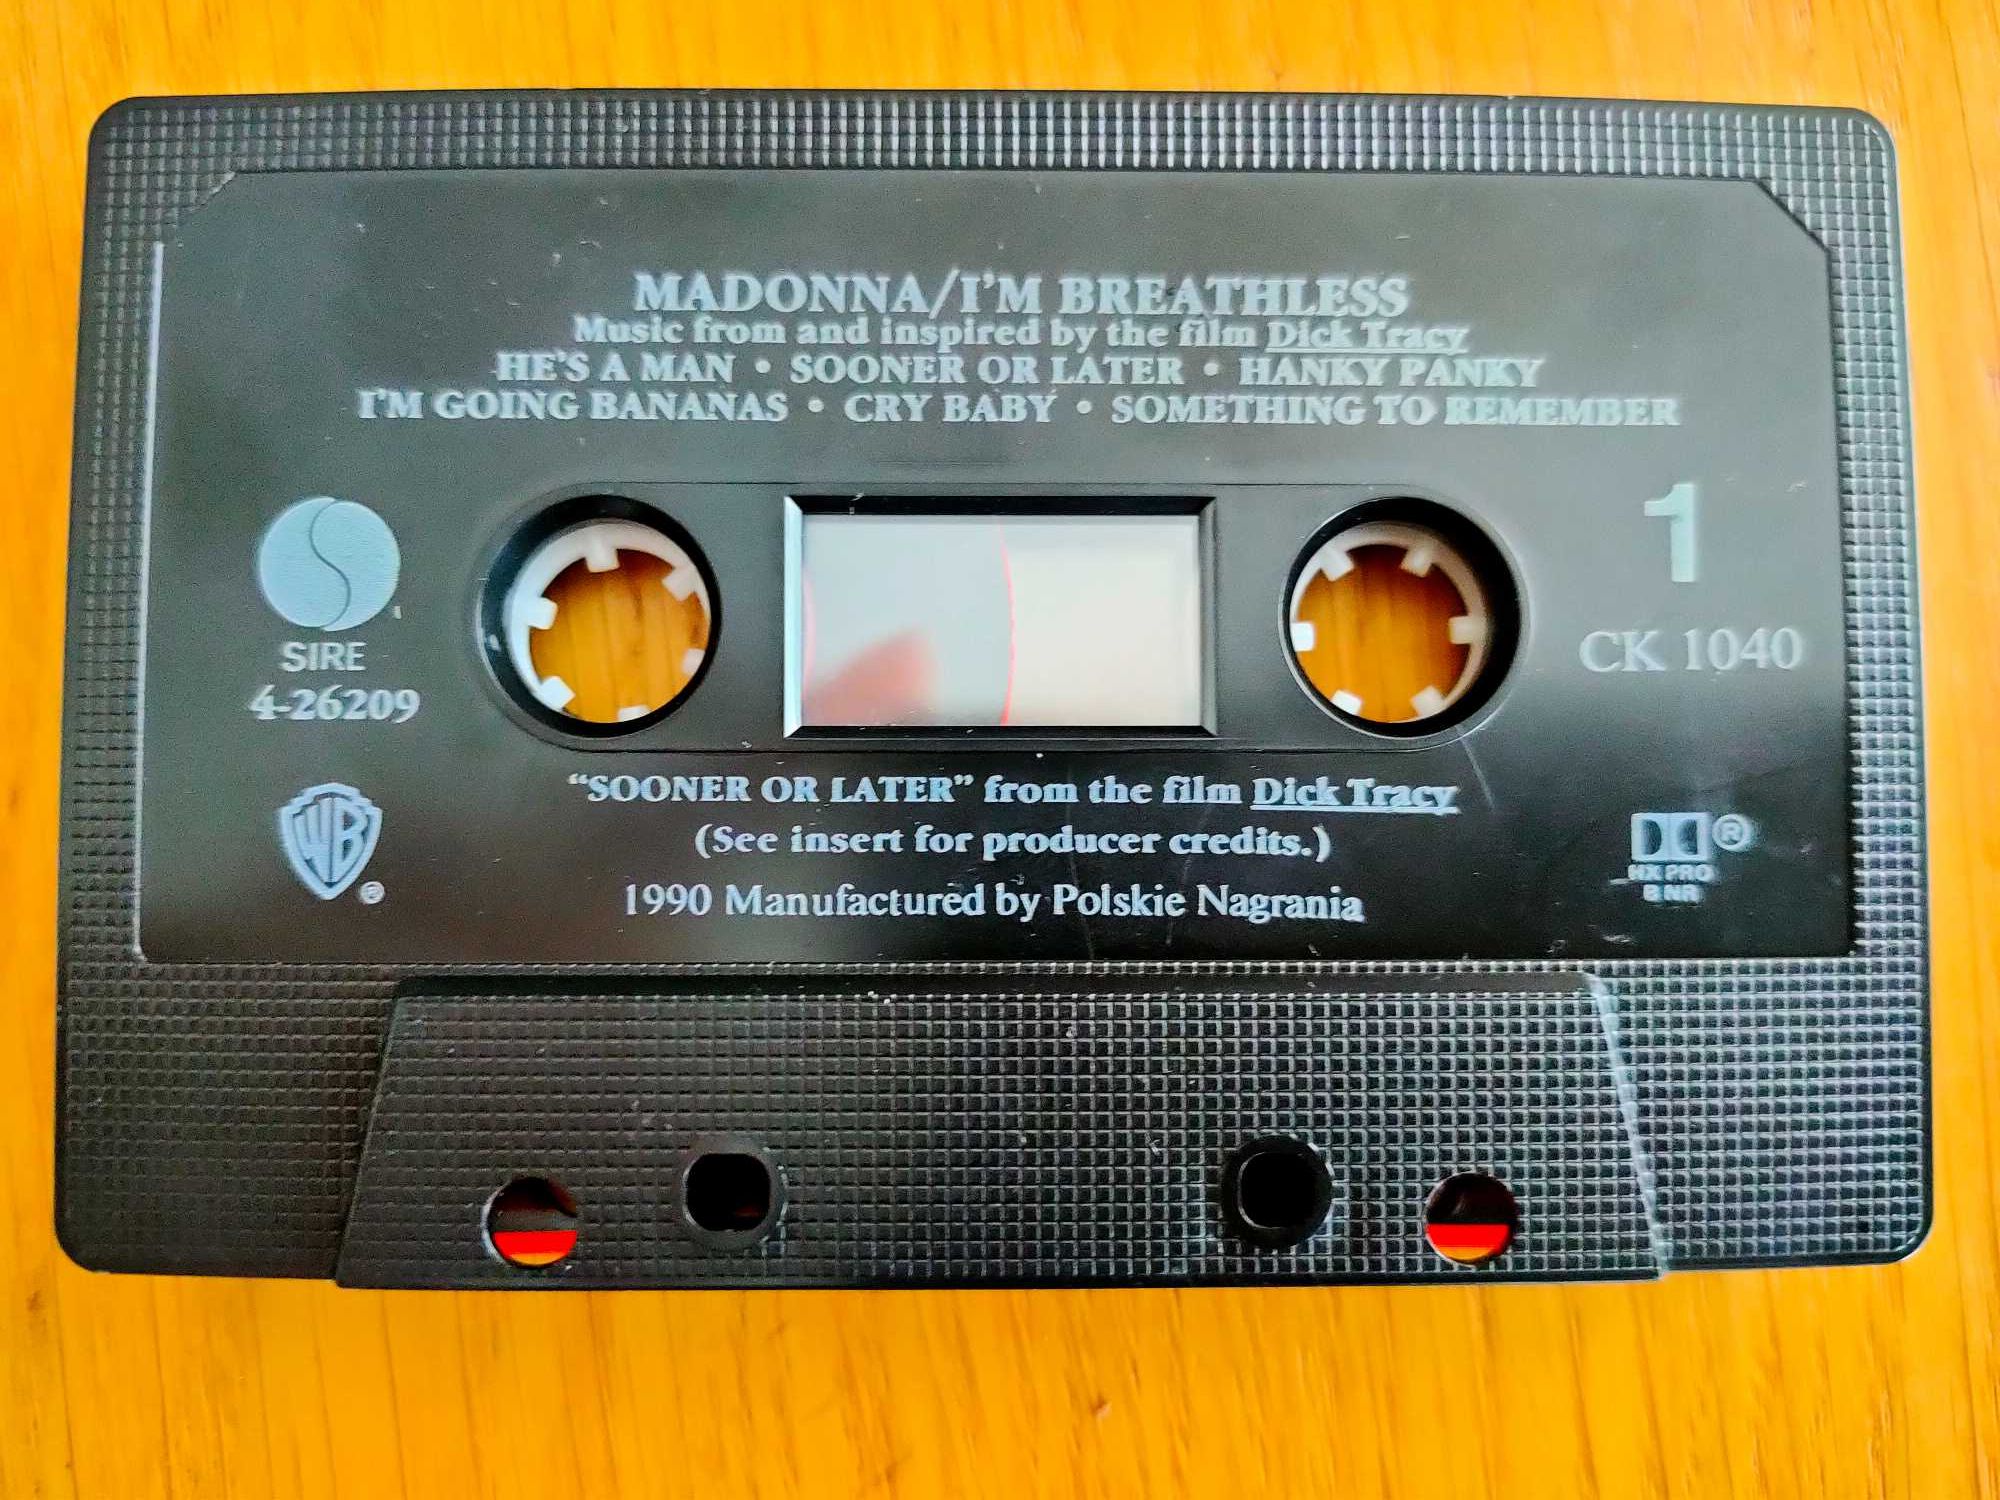 I am breathless Madonna - kaseta audio